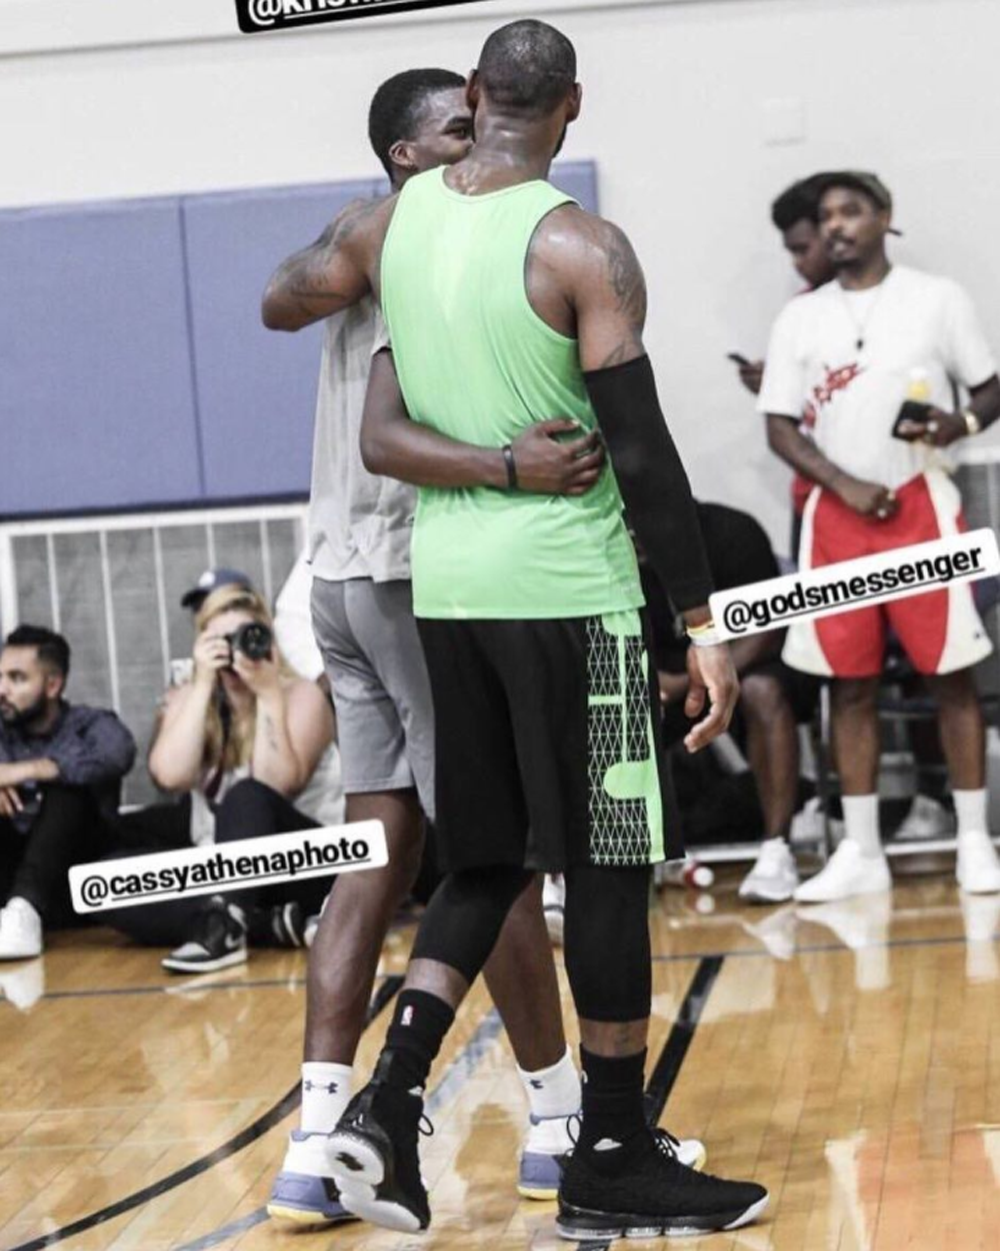 LeBron James Wears the Nike LeBron 15 